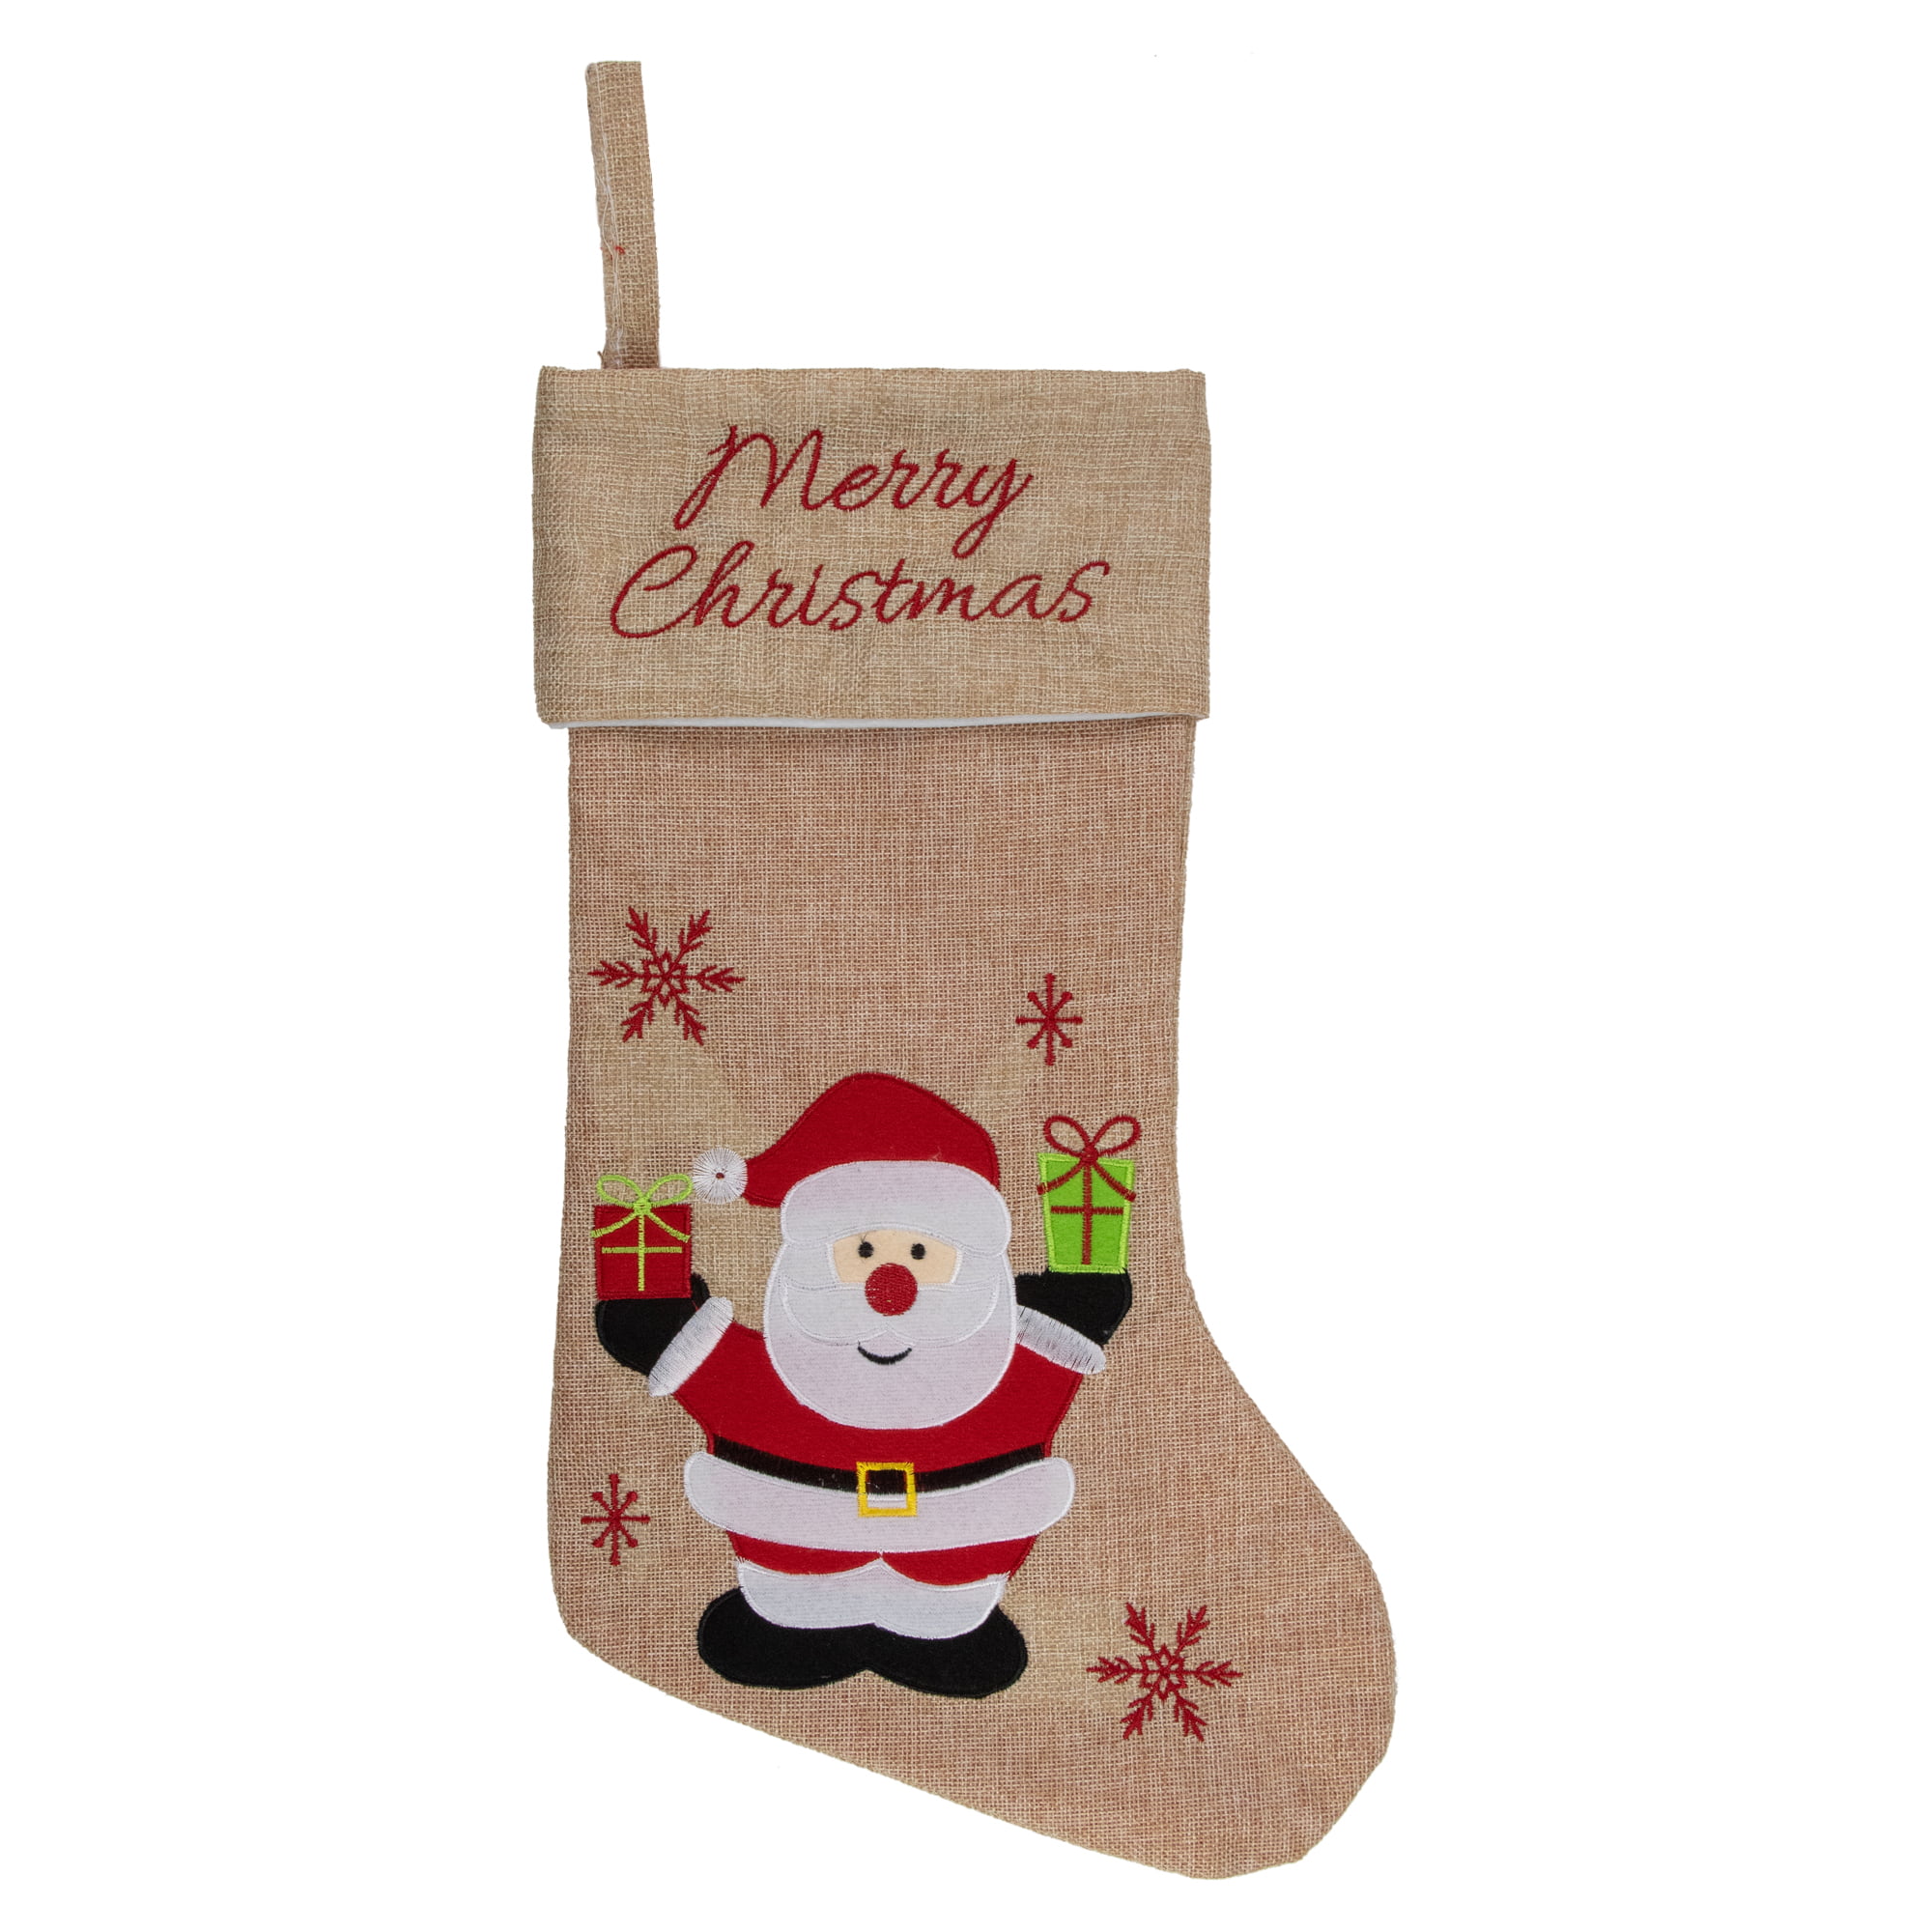 Personalised Embroidered Christmas stocking Santa Gift sack Hessian Jute Red Tan 